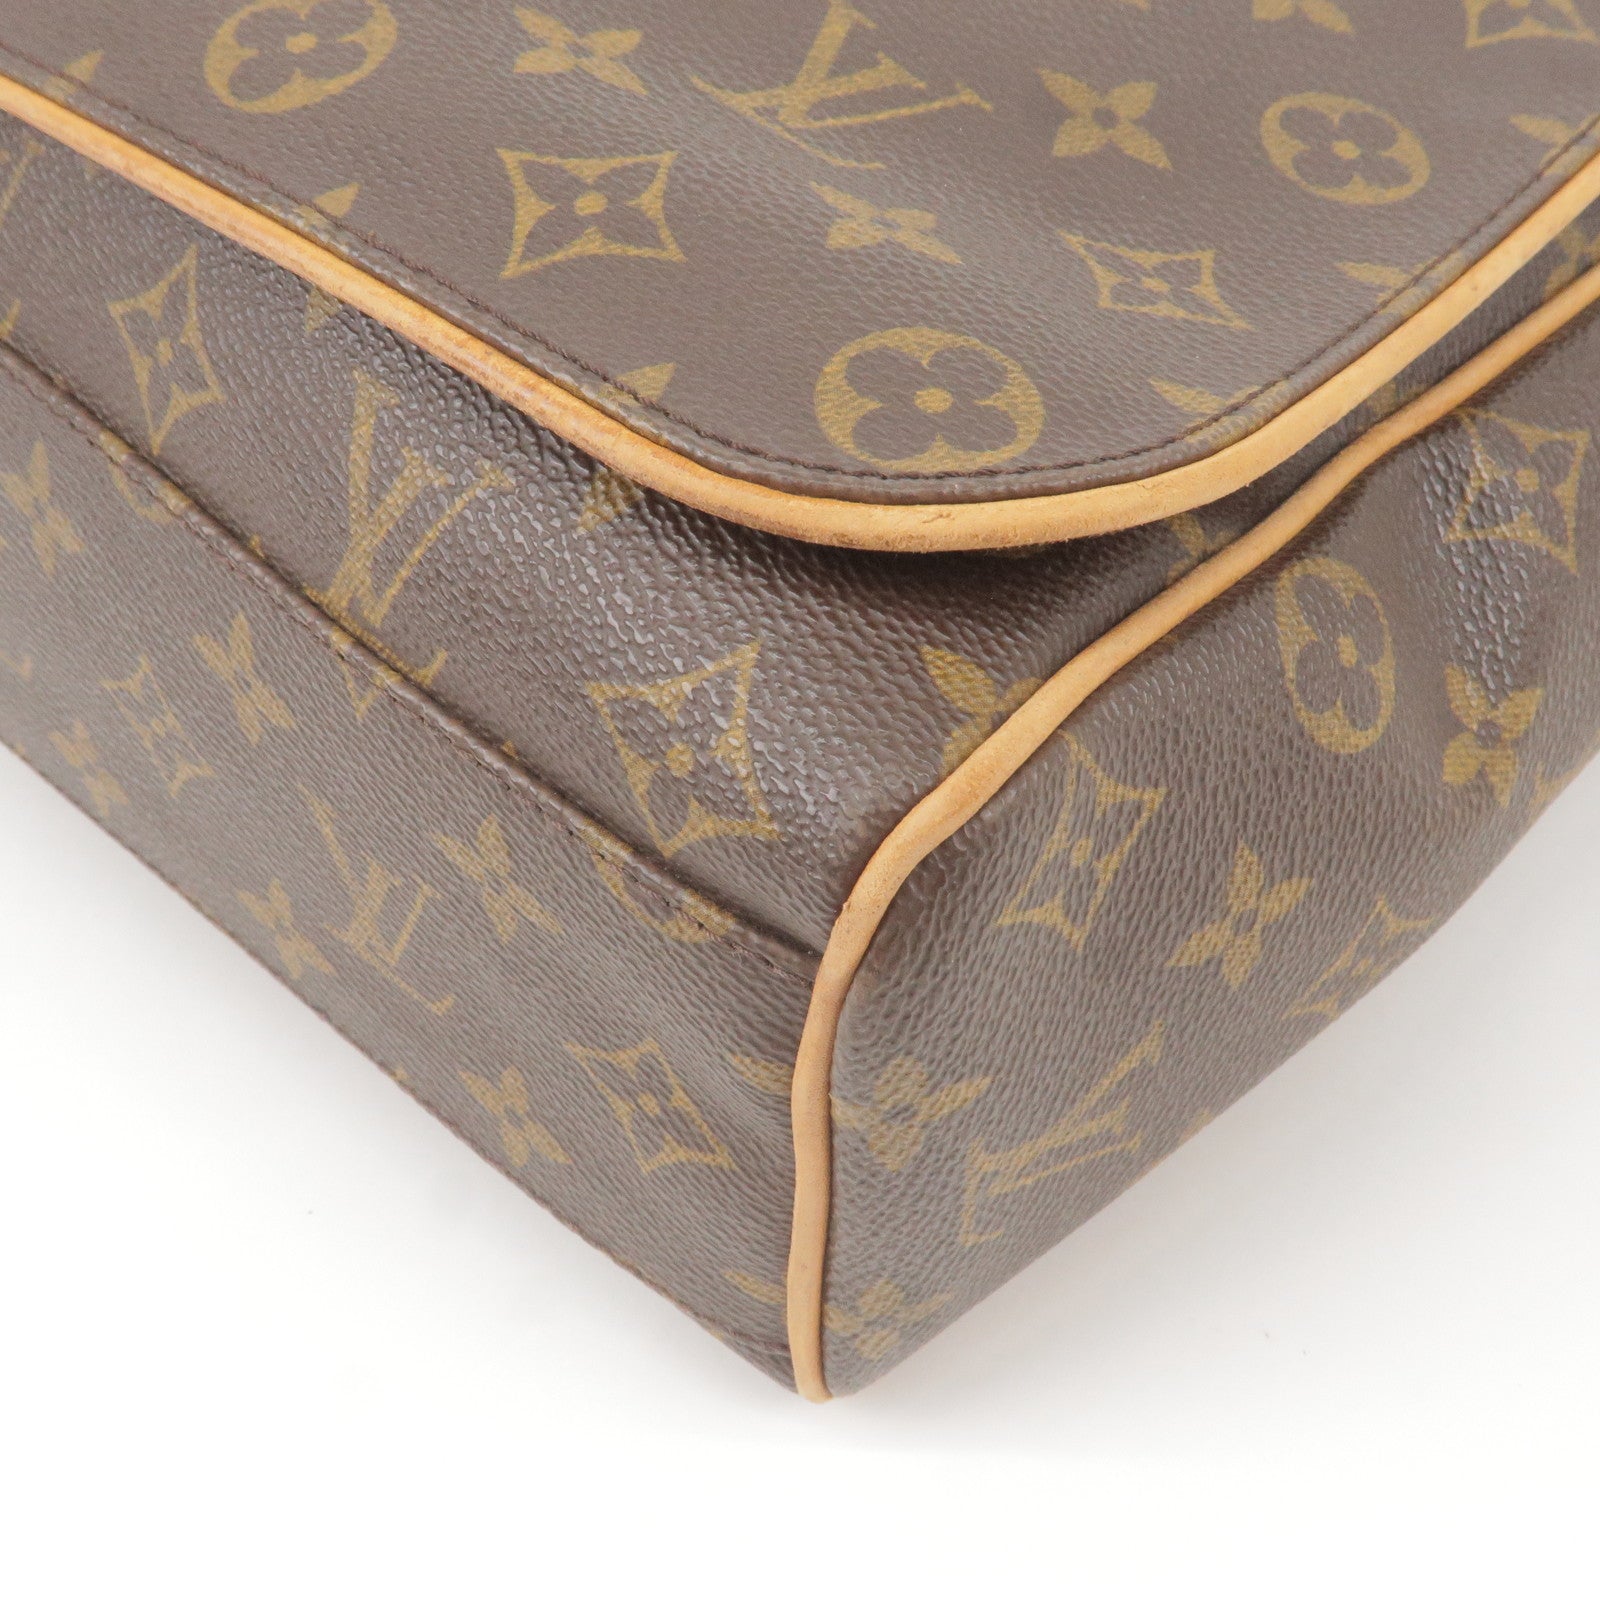 Authentic Louis Vuitton monogram Abbesses crossbody messenger bag